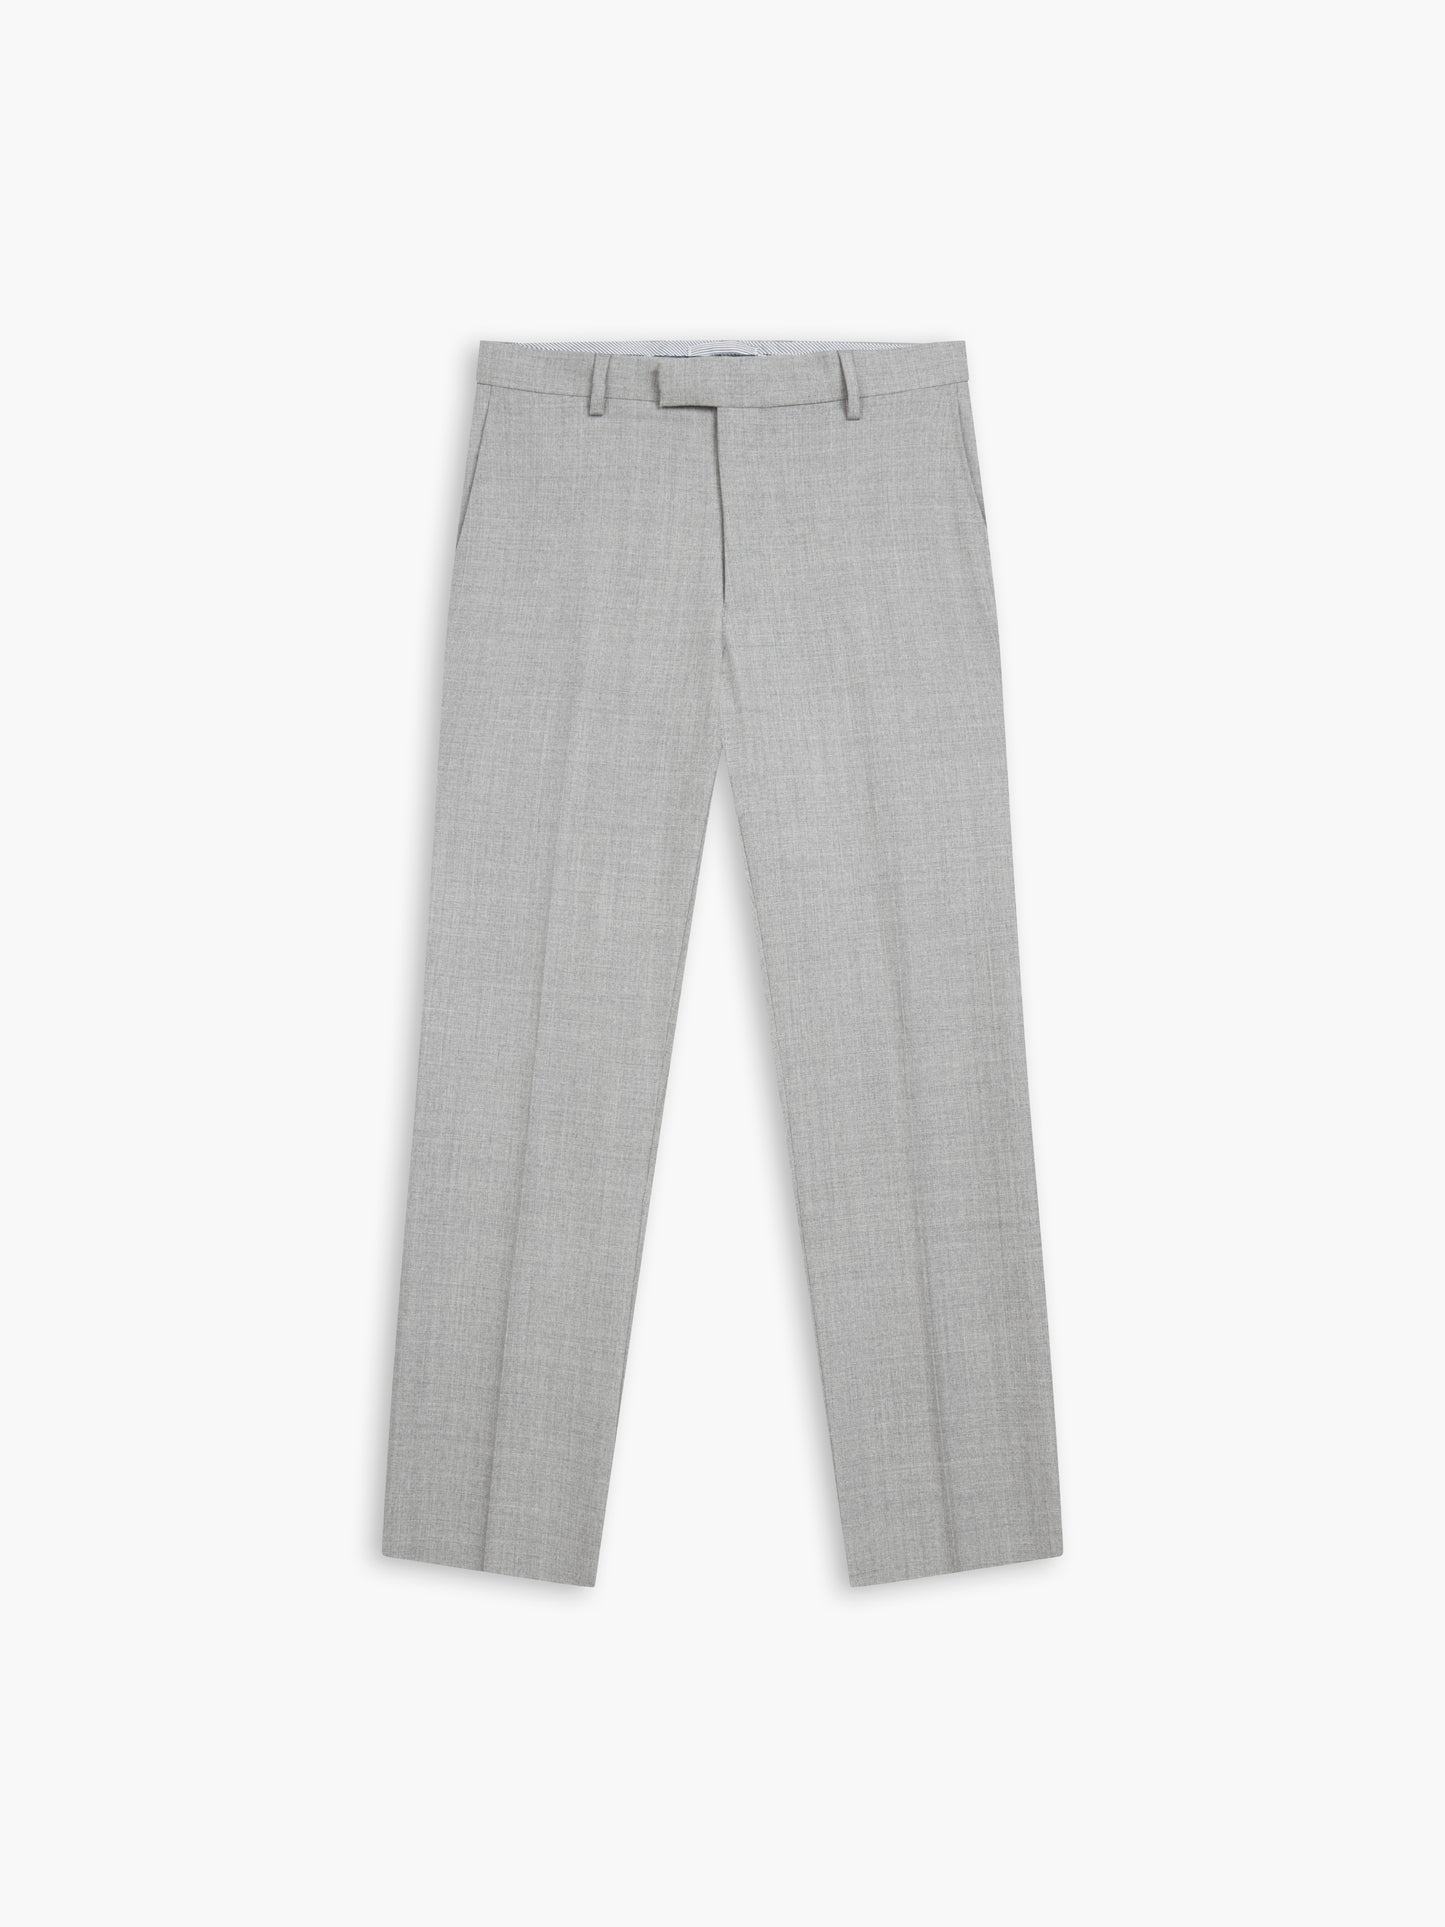 Canaletto Italian Luxury Slim Grey Suit Trouser